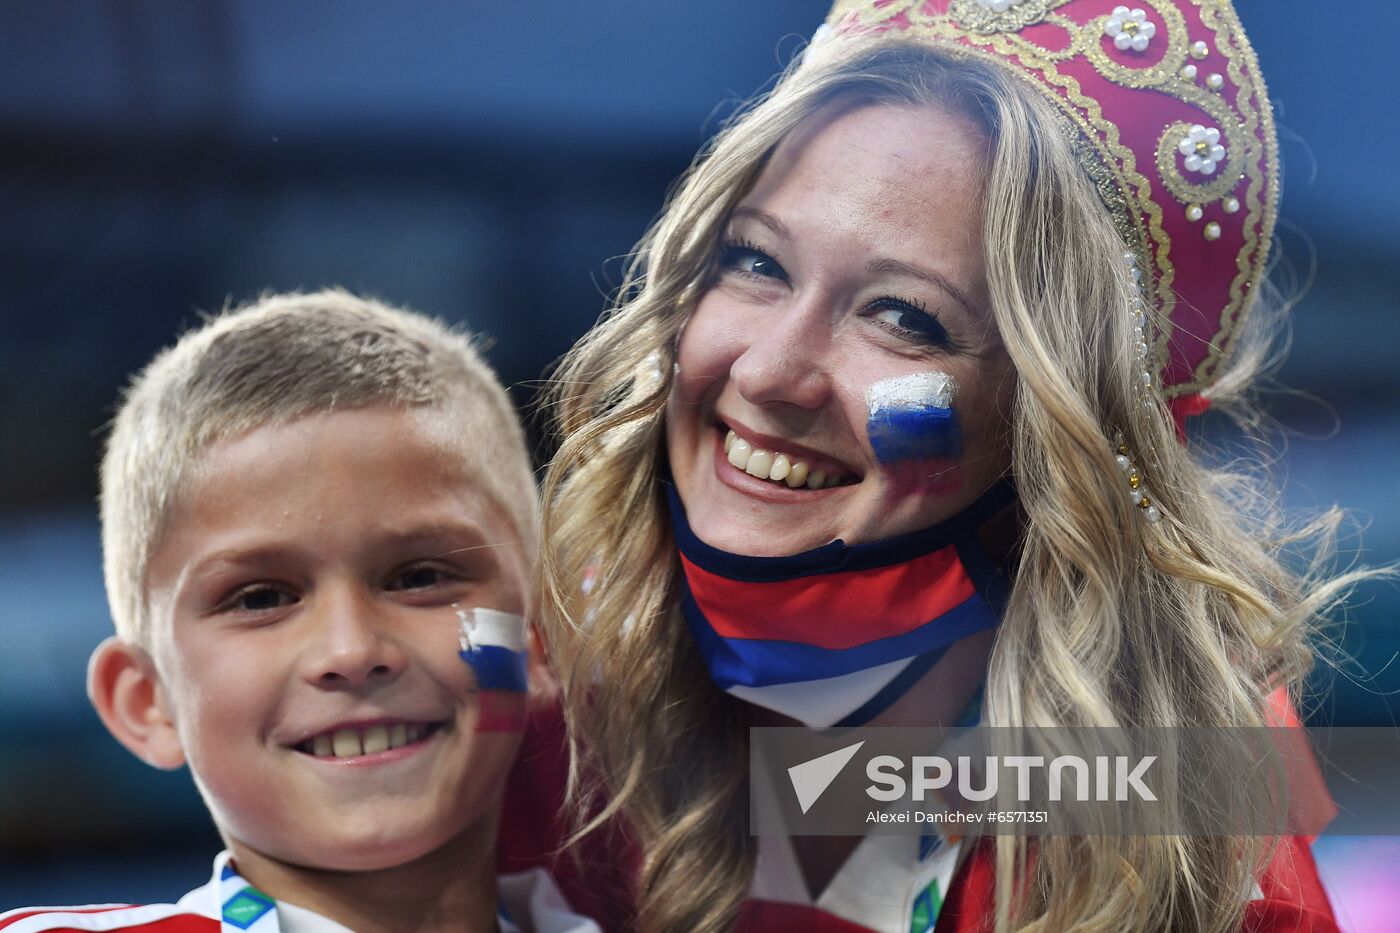 Russia Soccer Euro 2020 Belgium - Russia Fans